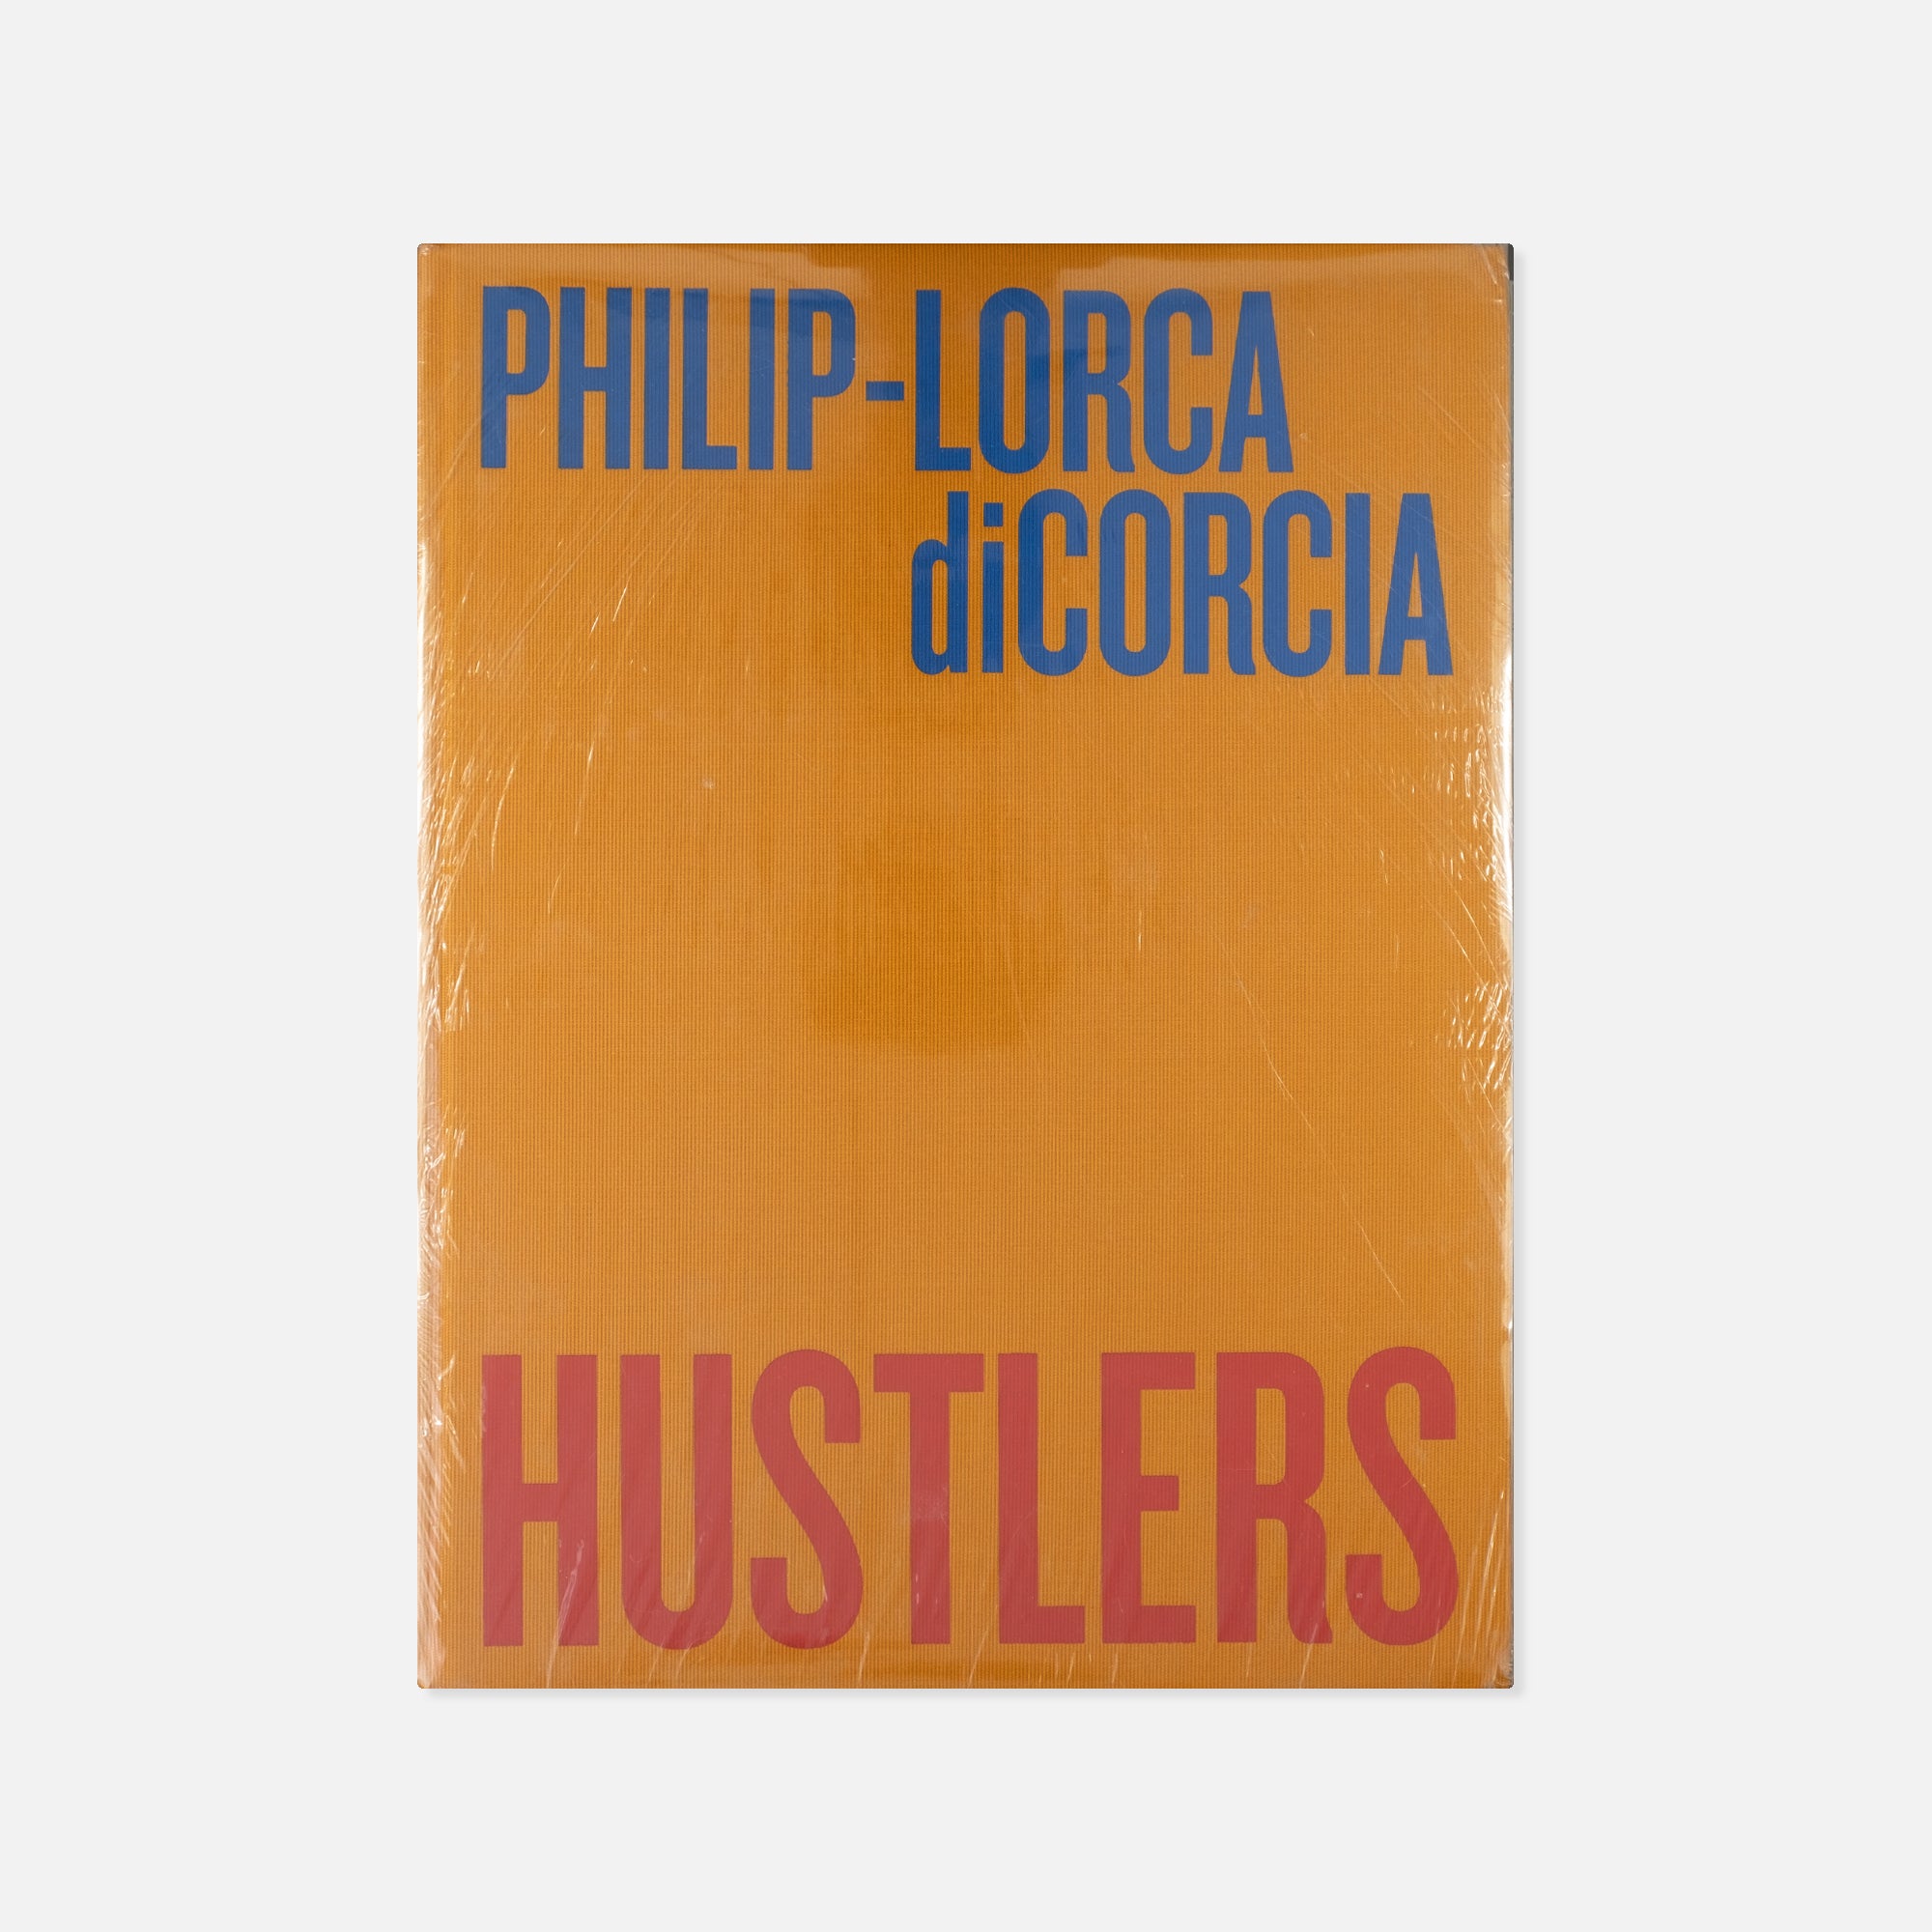 Philip-Lorca diCorcia — Hustlers